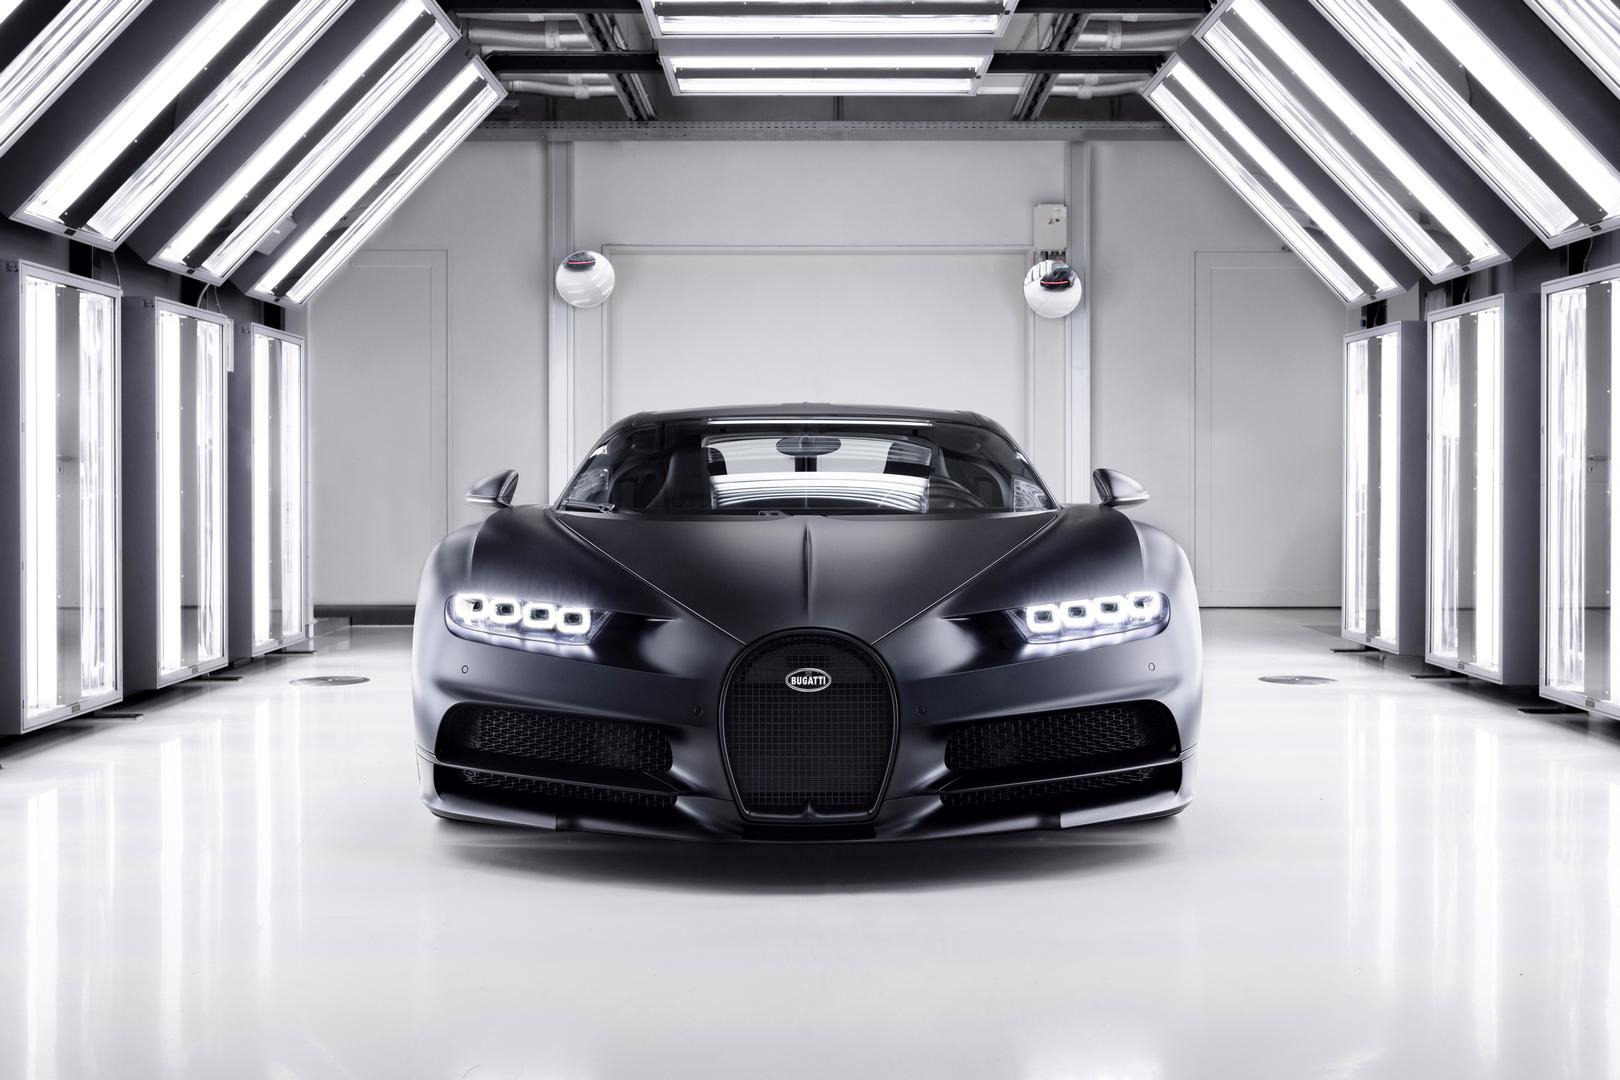 Black Bugatti Chiron